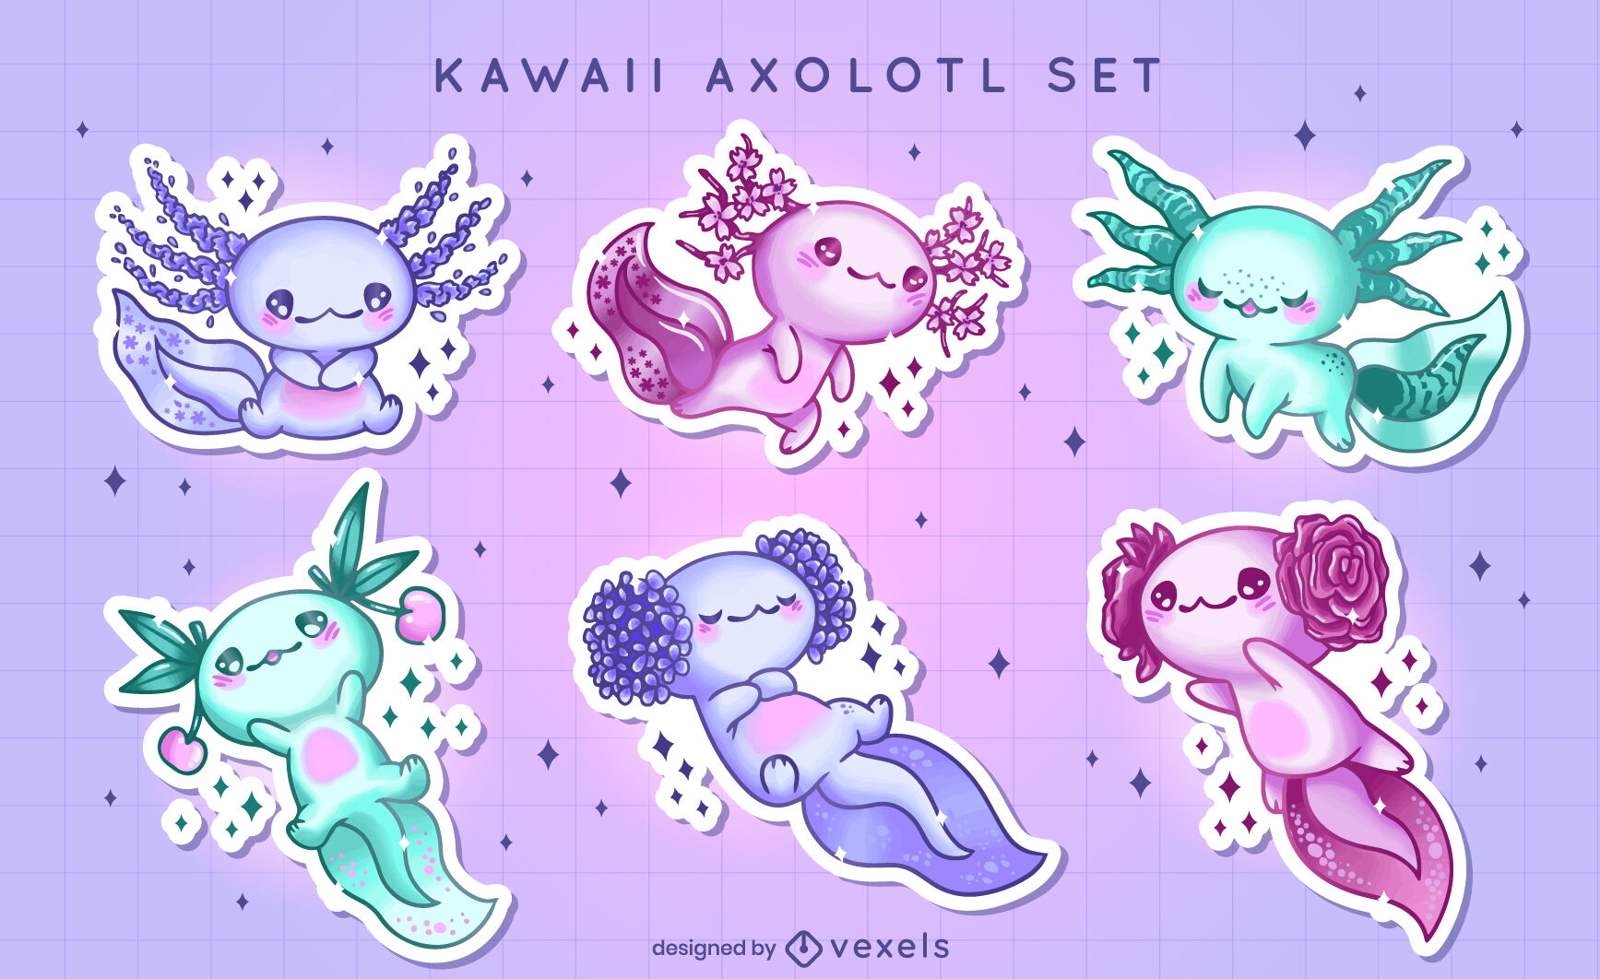 Kawaii axolotl stickers set